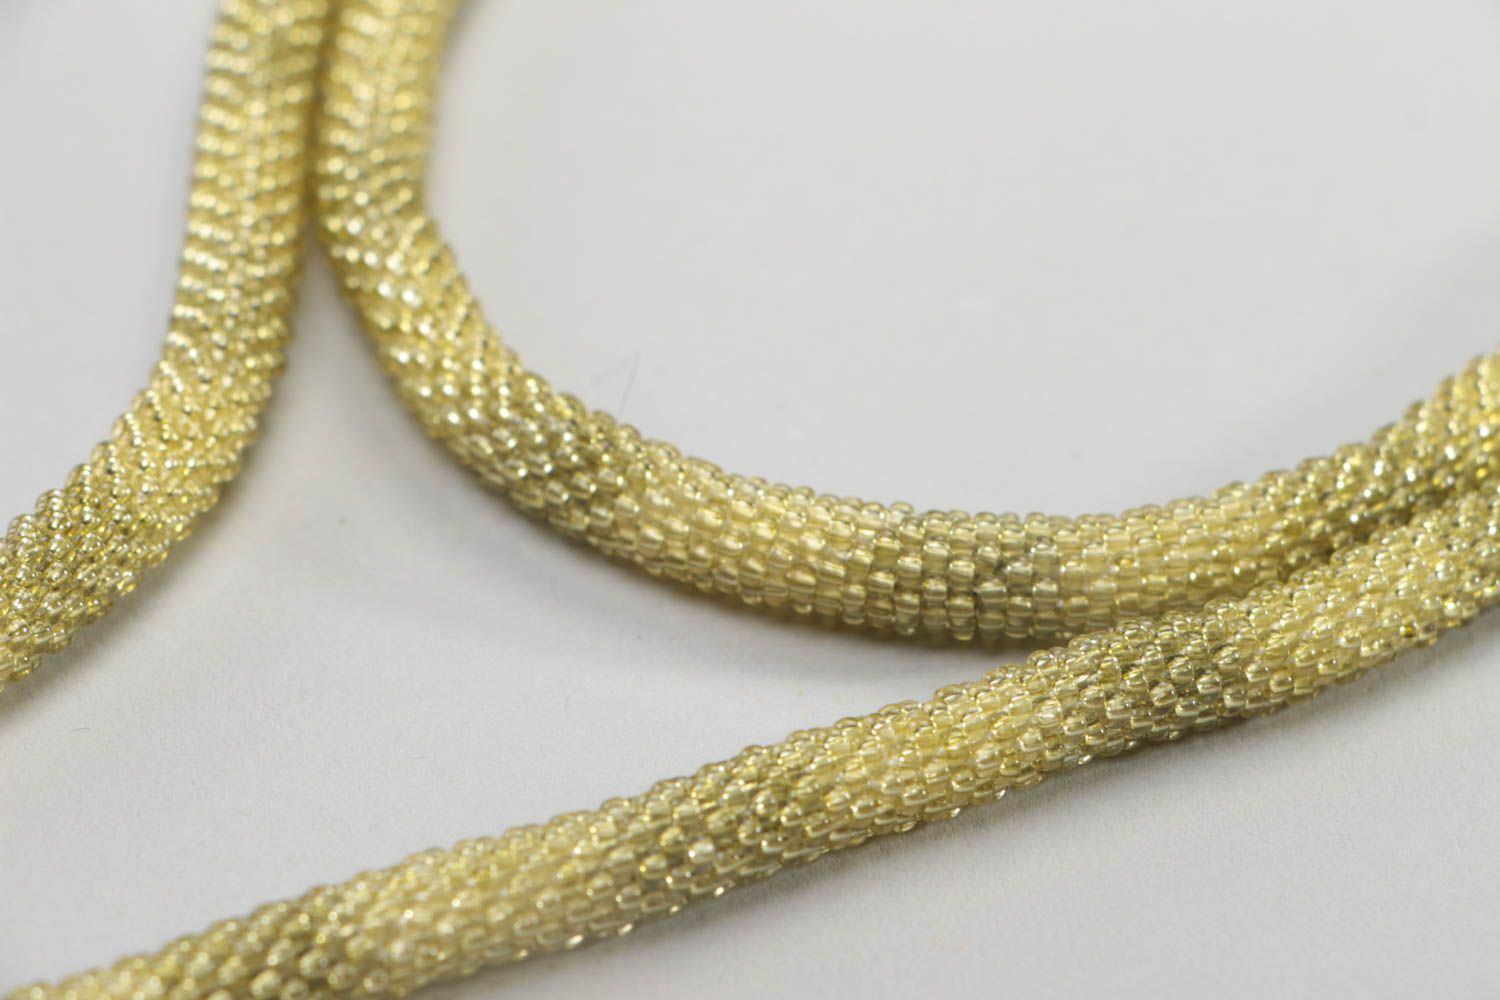 Handmade beaded cord necklace accessory made of ceramic pearls stylish jewelry photo 4